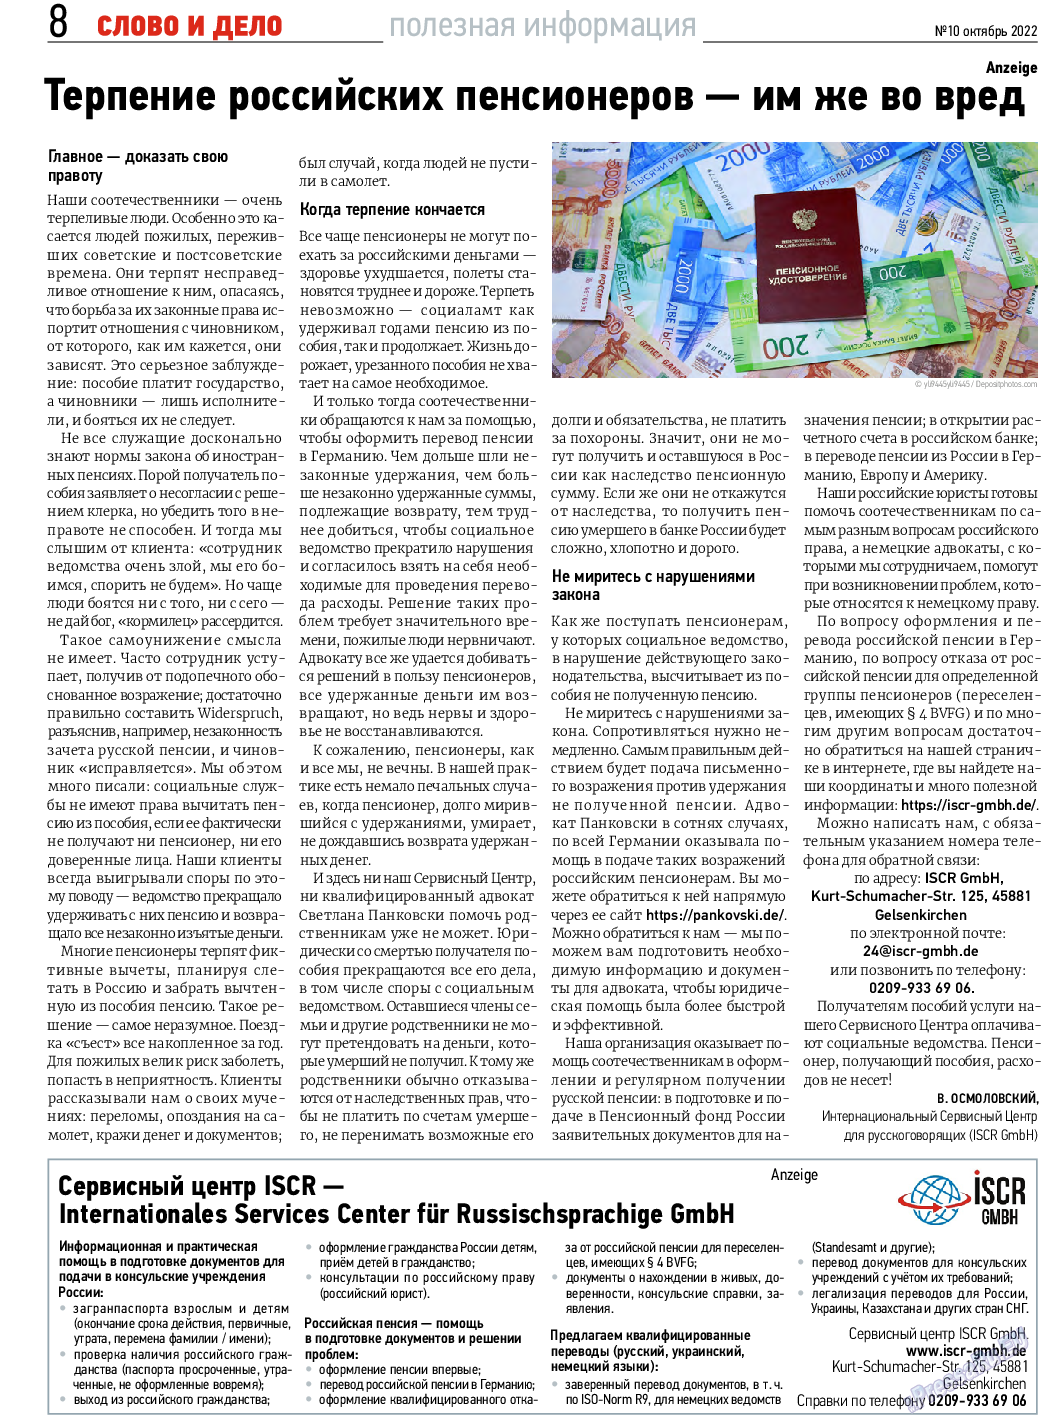 Телеграф NRW, газета. 2022 №10 стр.8